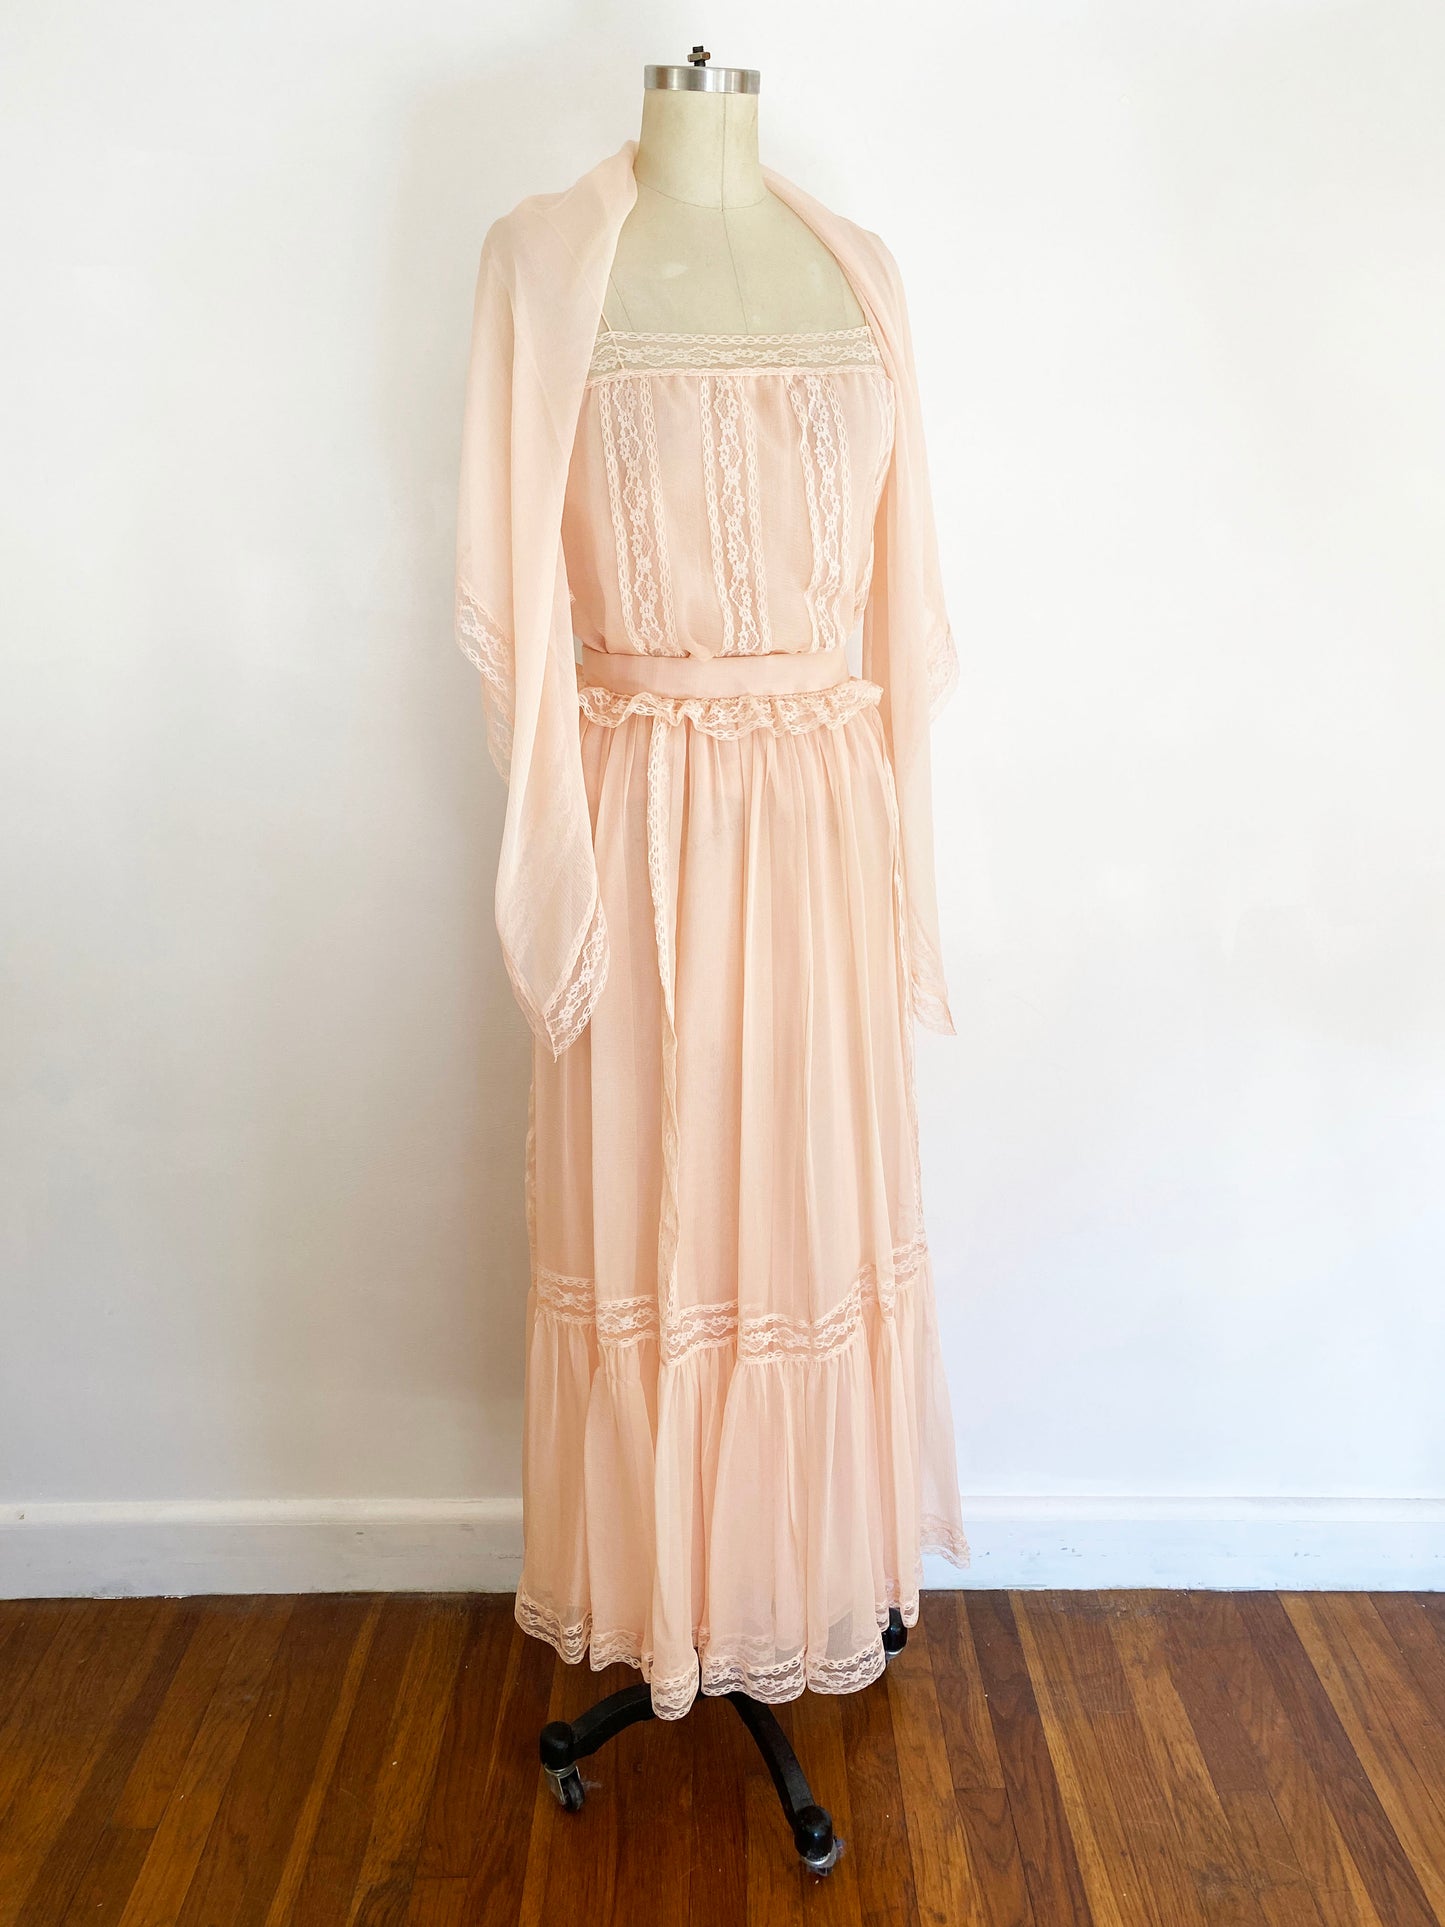 1970s Oscar de la Renta Peachy Pink Chiffon Silk and Lace Dress Set Camisole Maxi Skirt Romantic / Extra Small